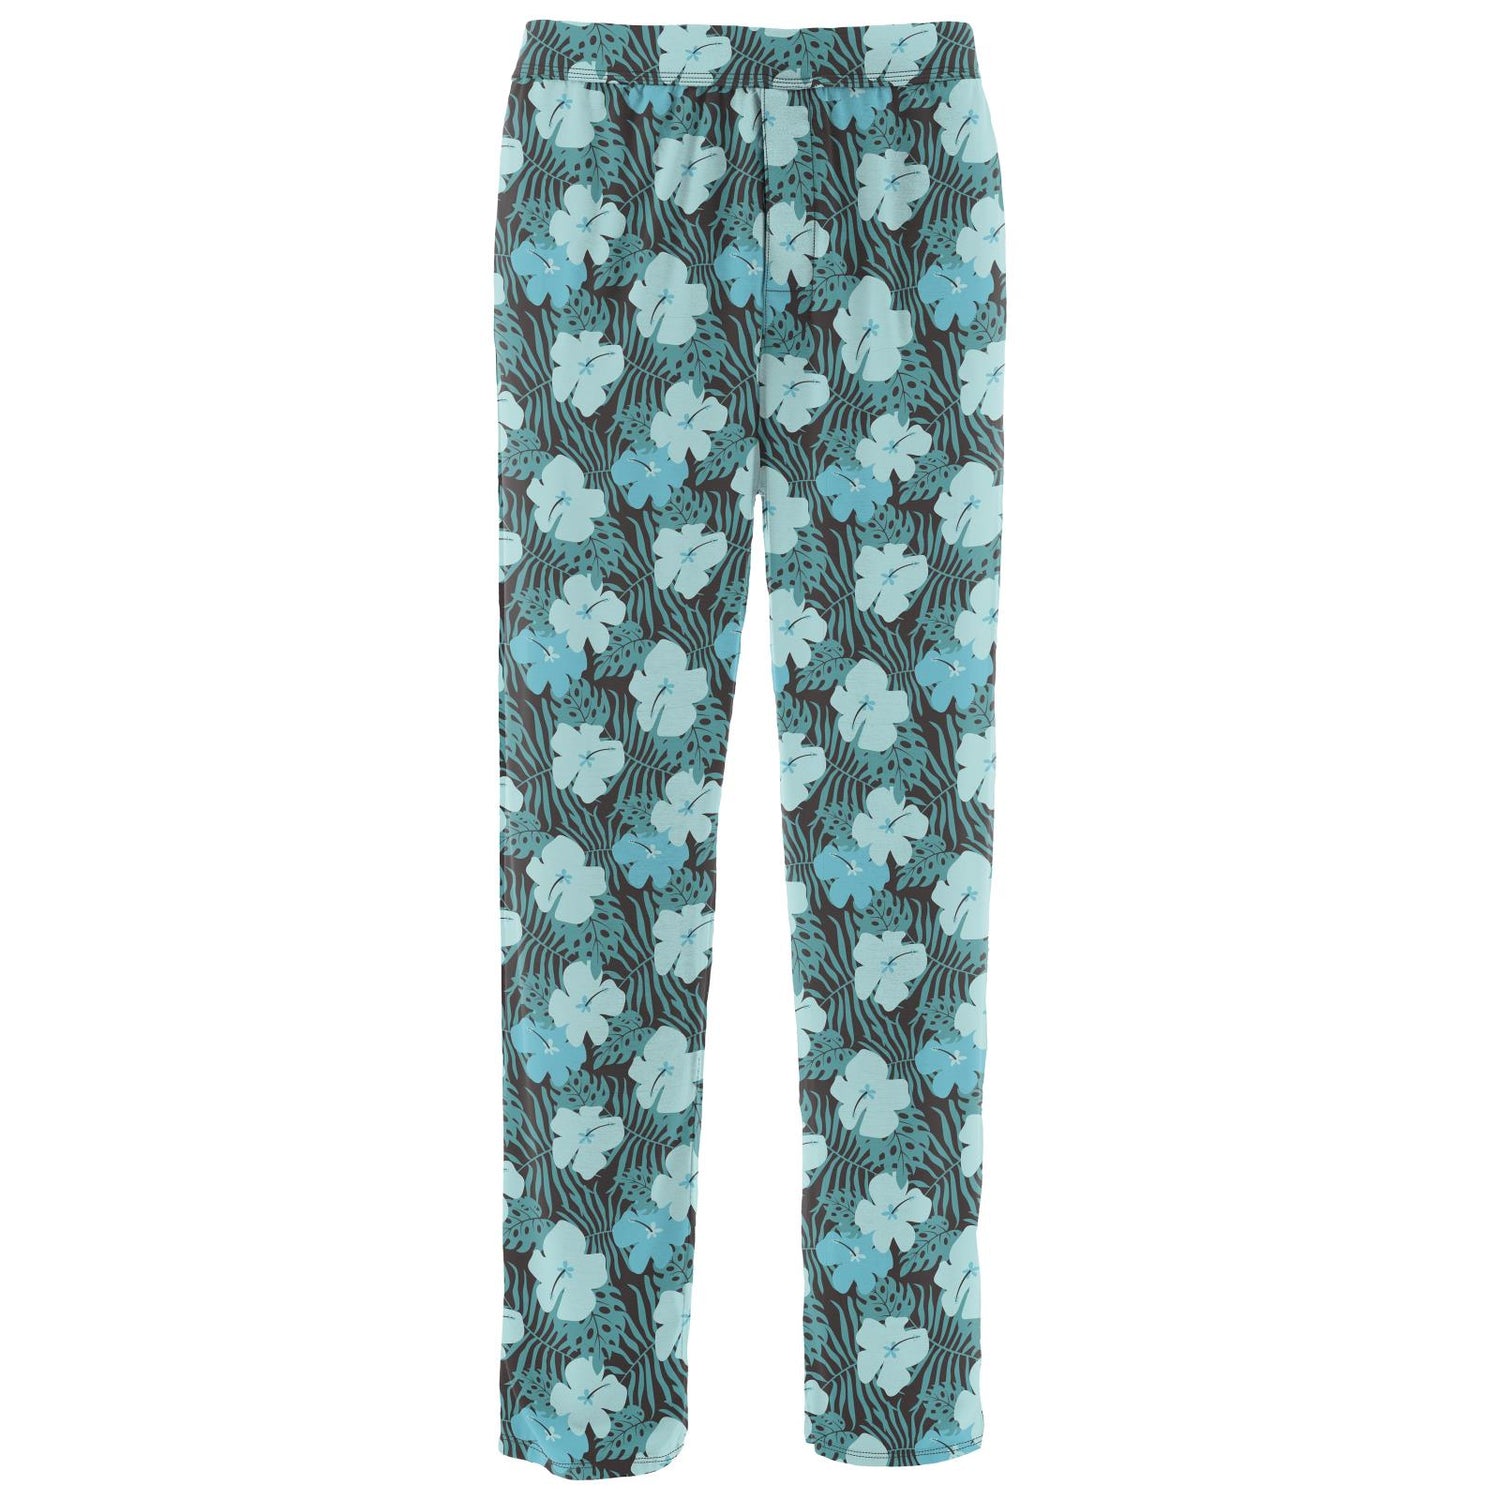 Men's Print Pajama Pants in Midnight Hawaiian Print